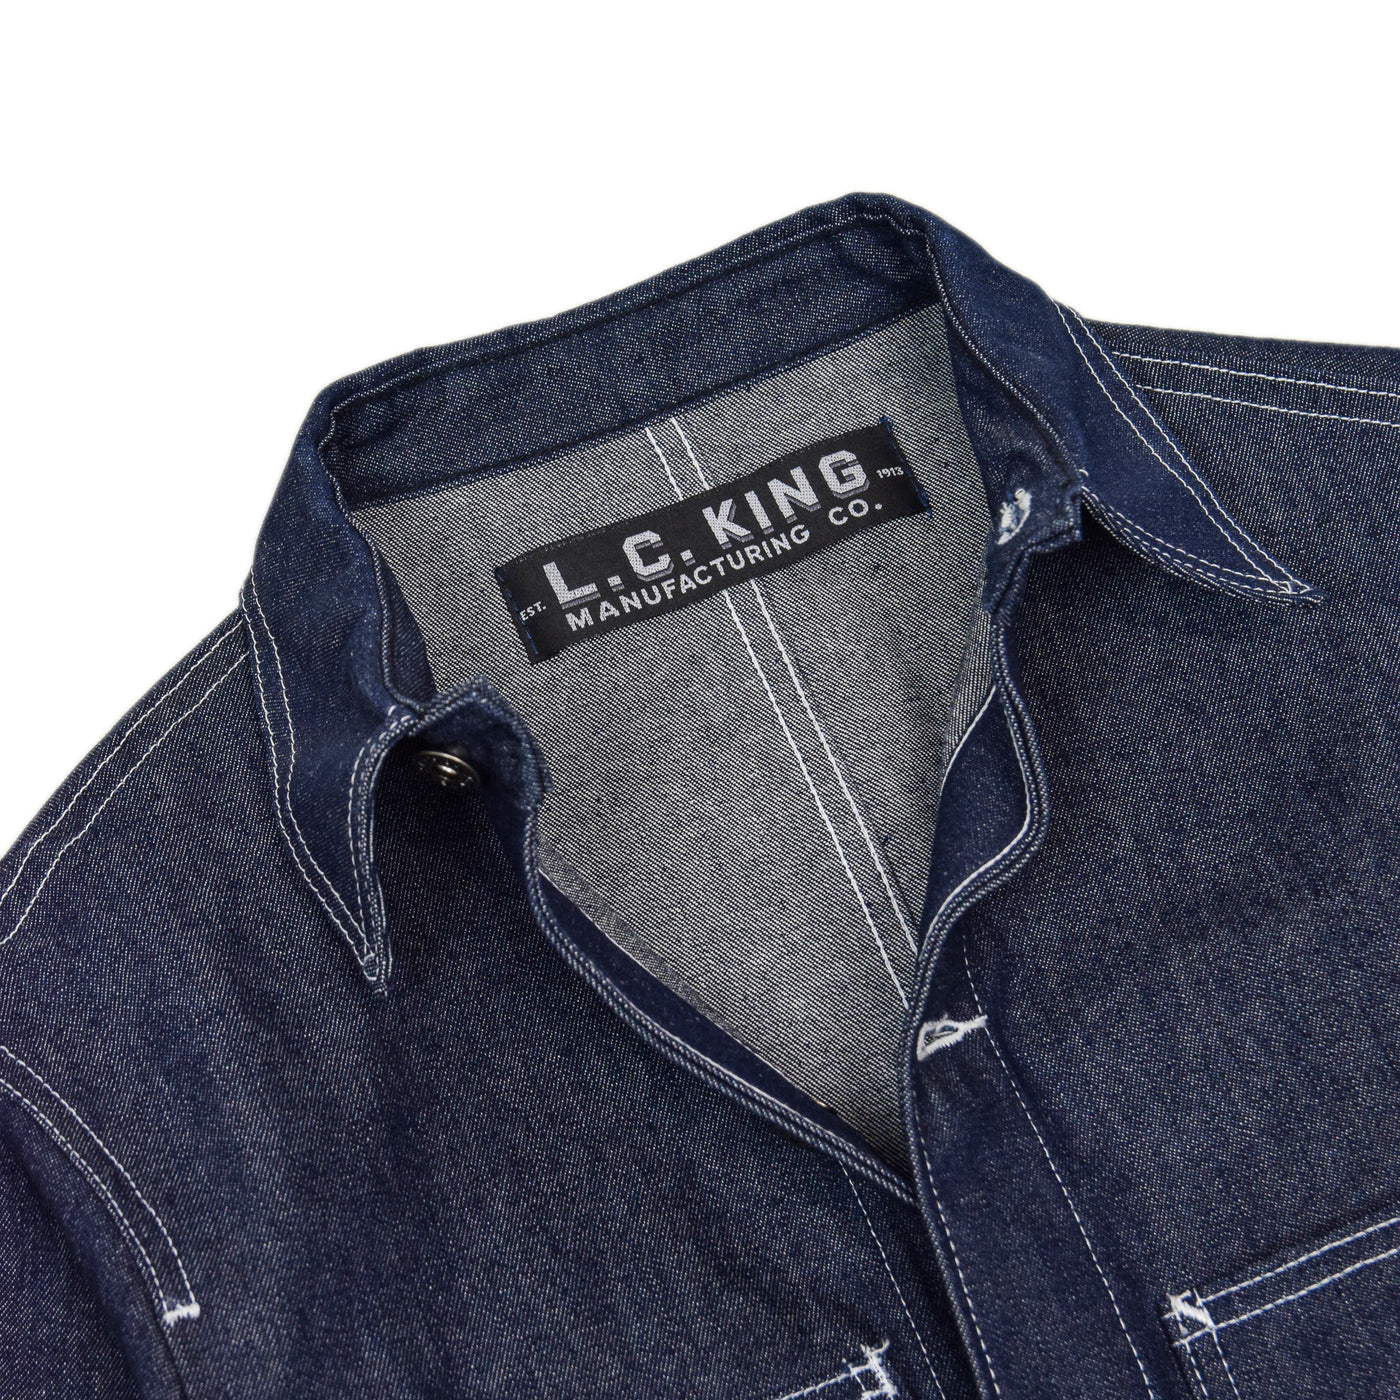 Pointer Brand LC King Rigid Denim Chore Coat Indigo Made in USA collar